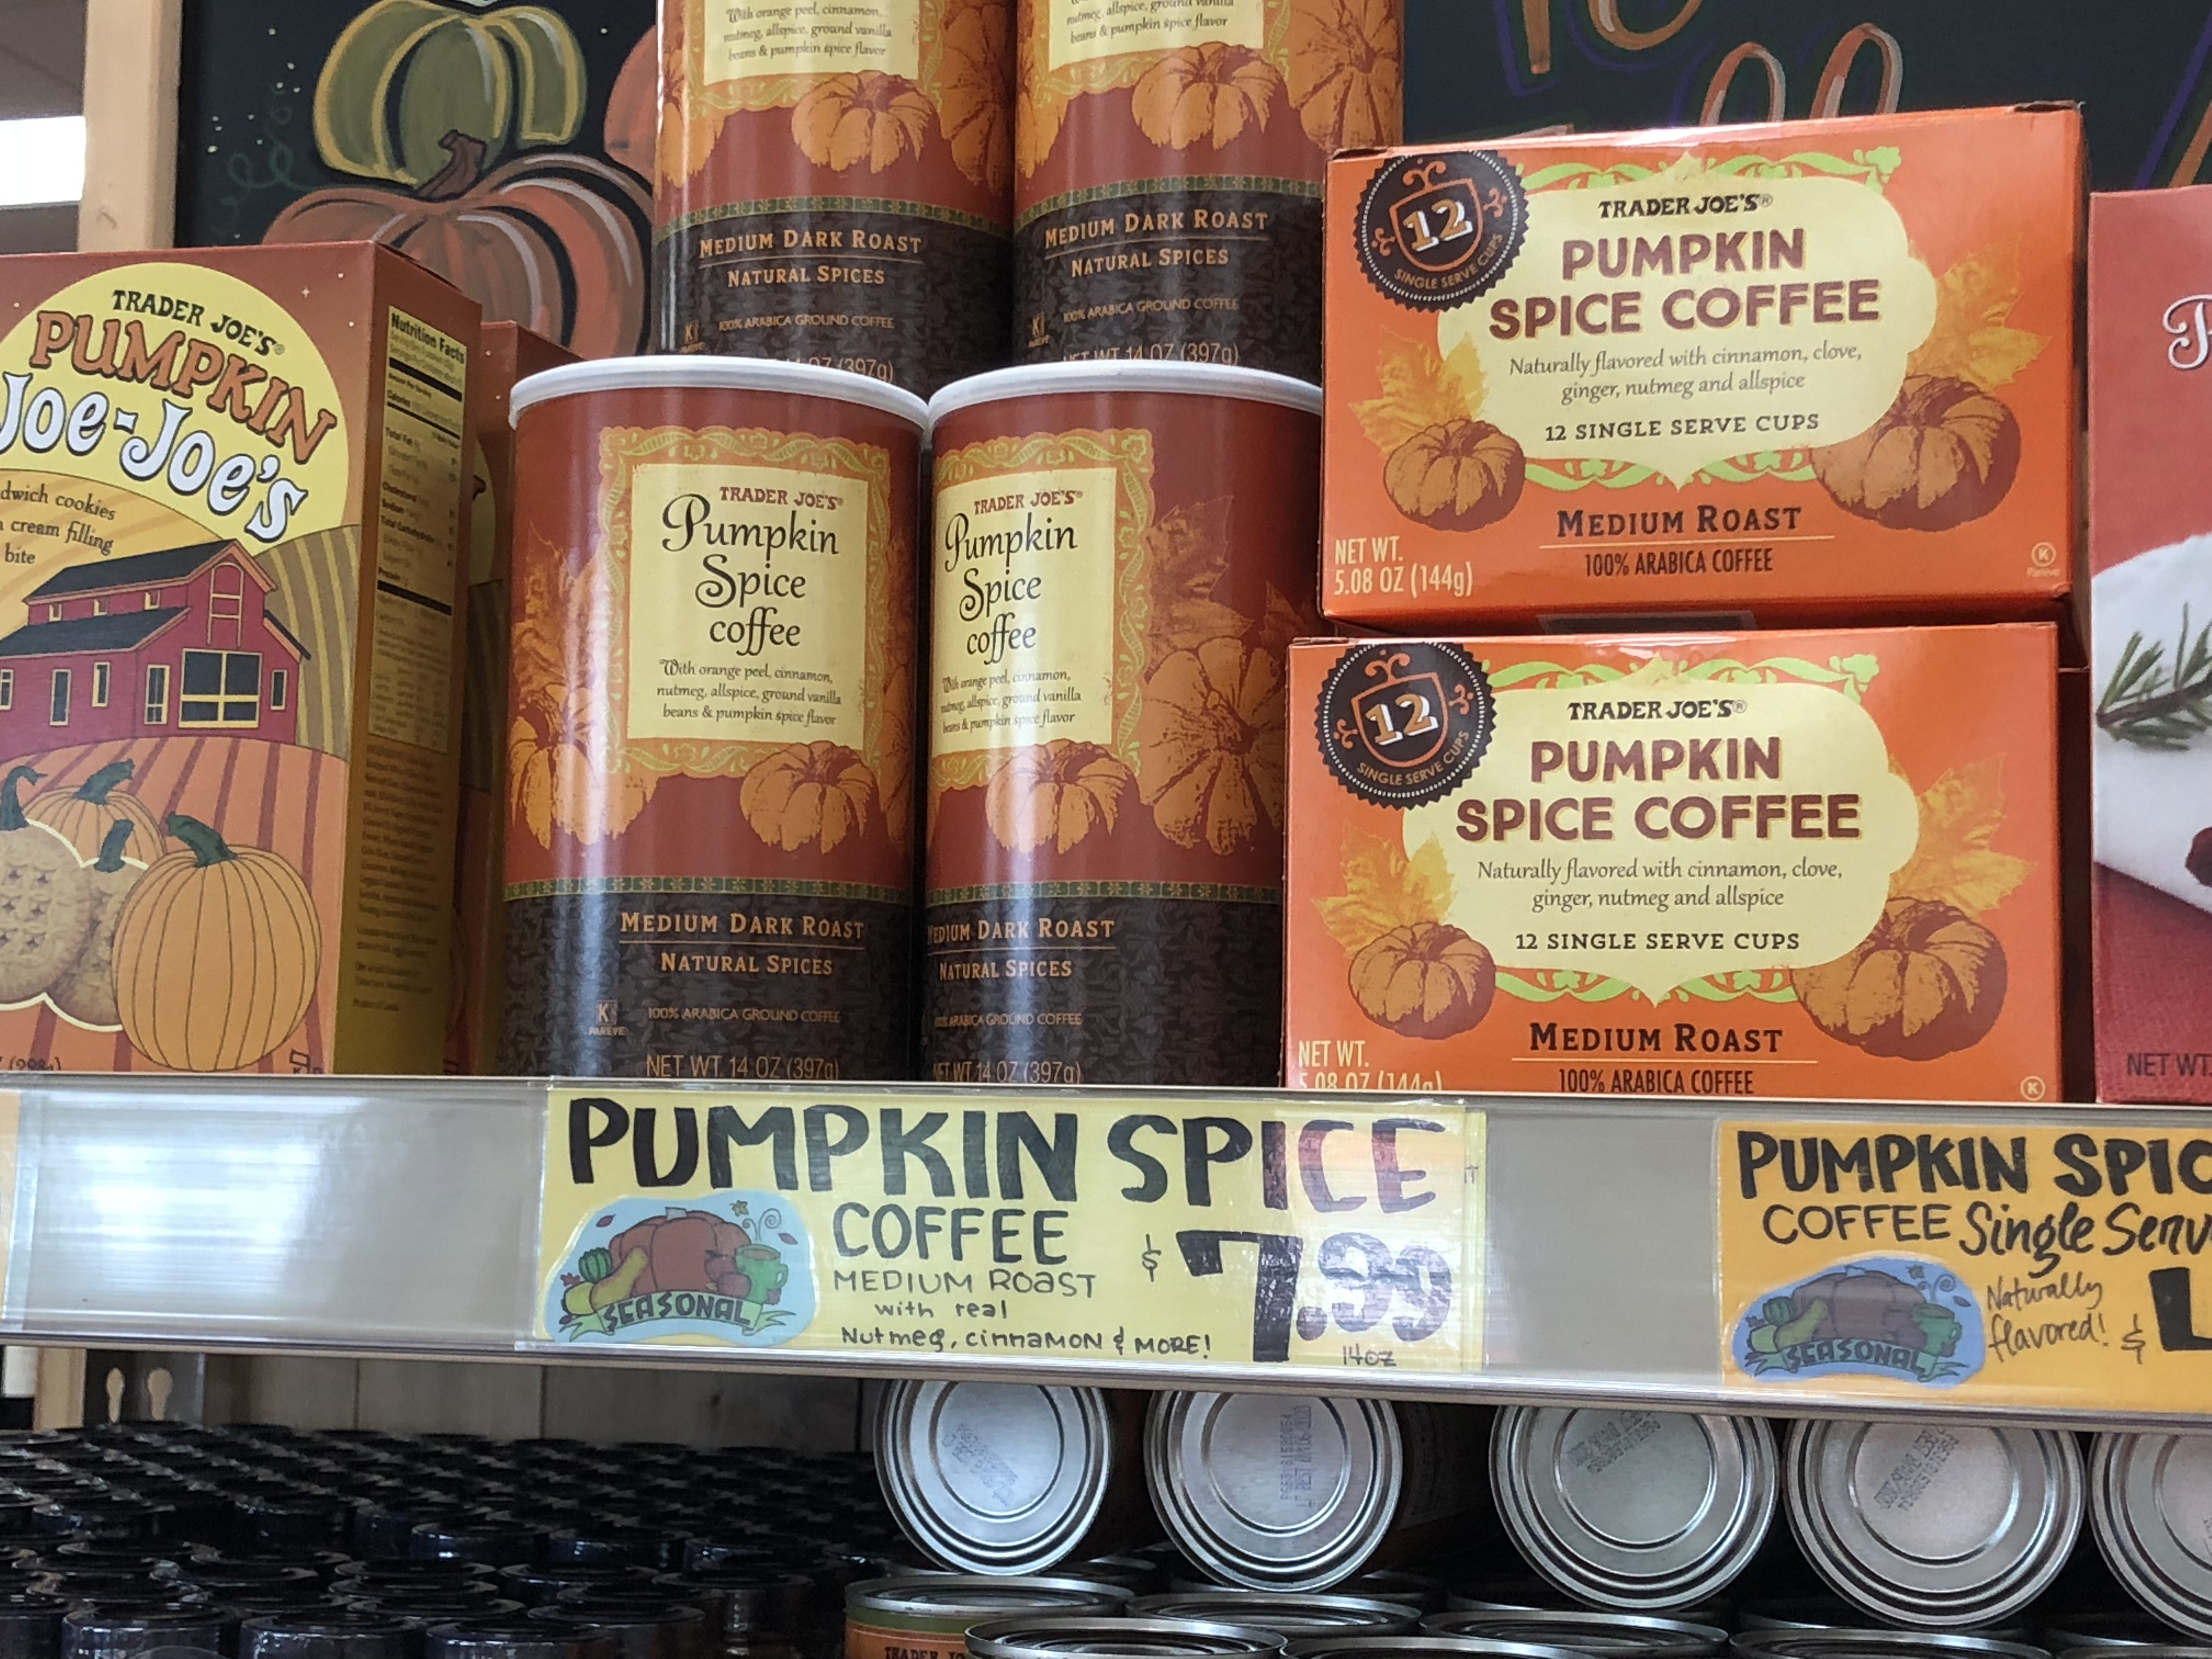 Deals on Trader Joe's Pumpkin items – Pumpkin spice coffee at Trader Joe's